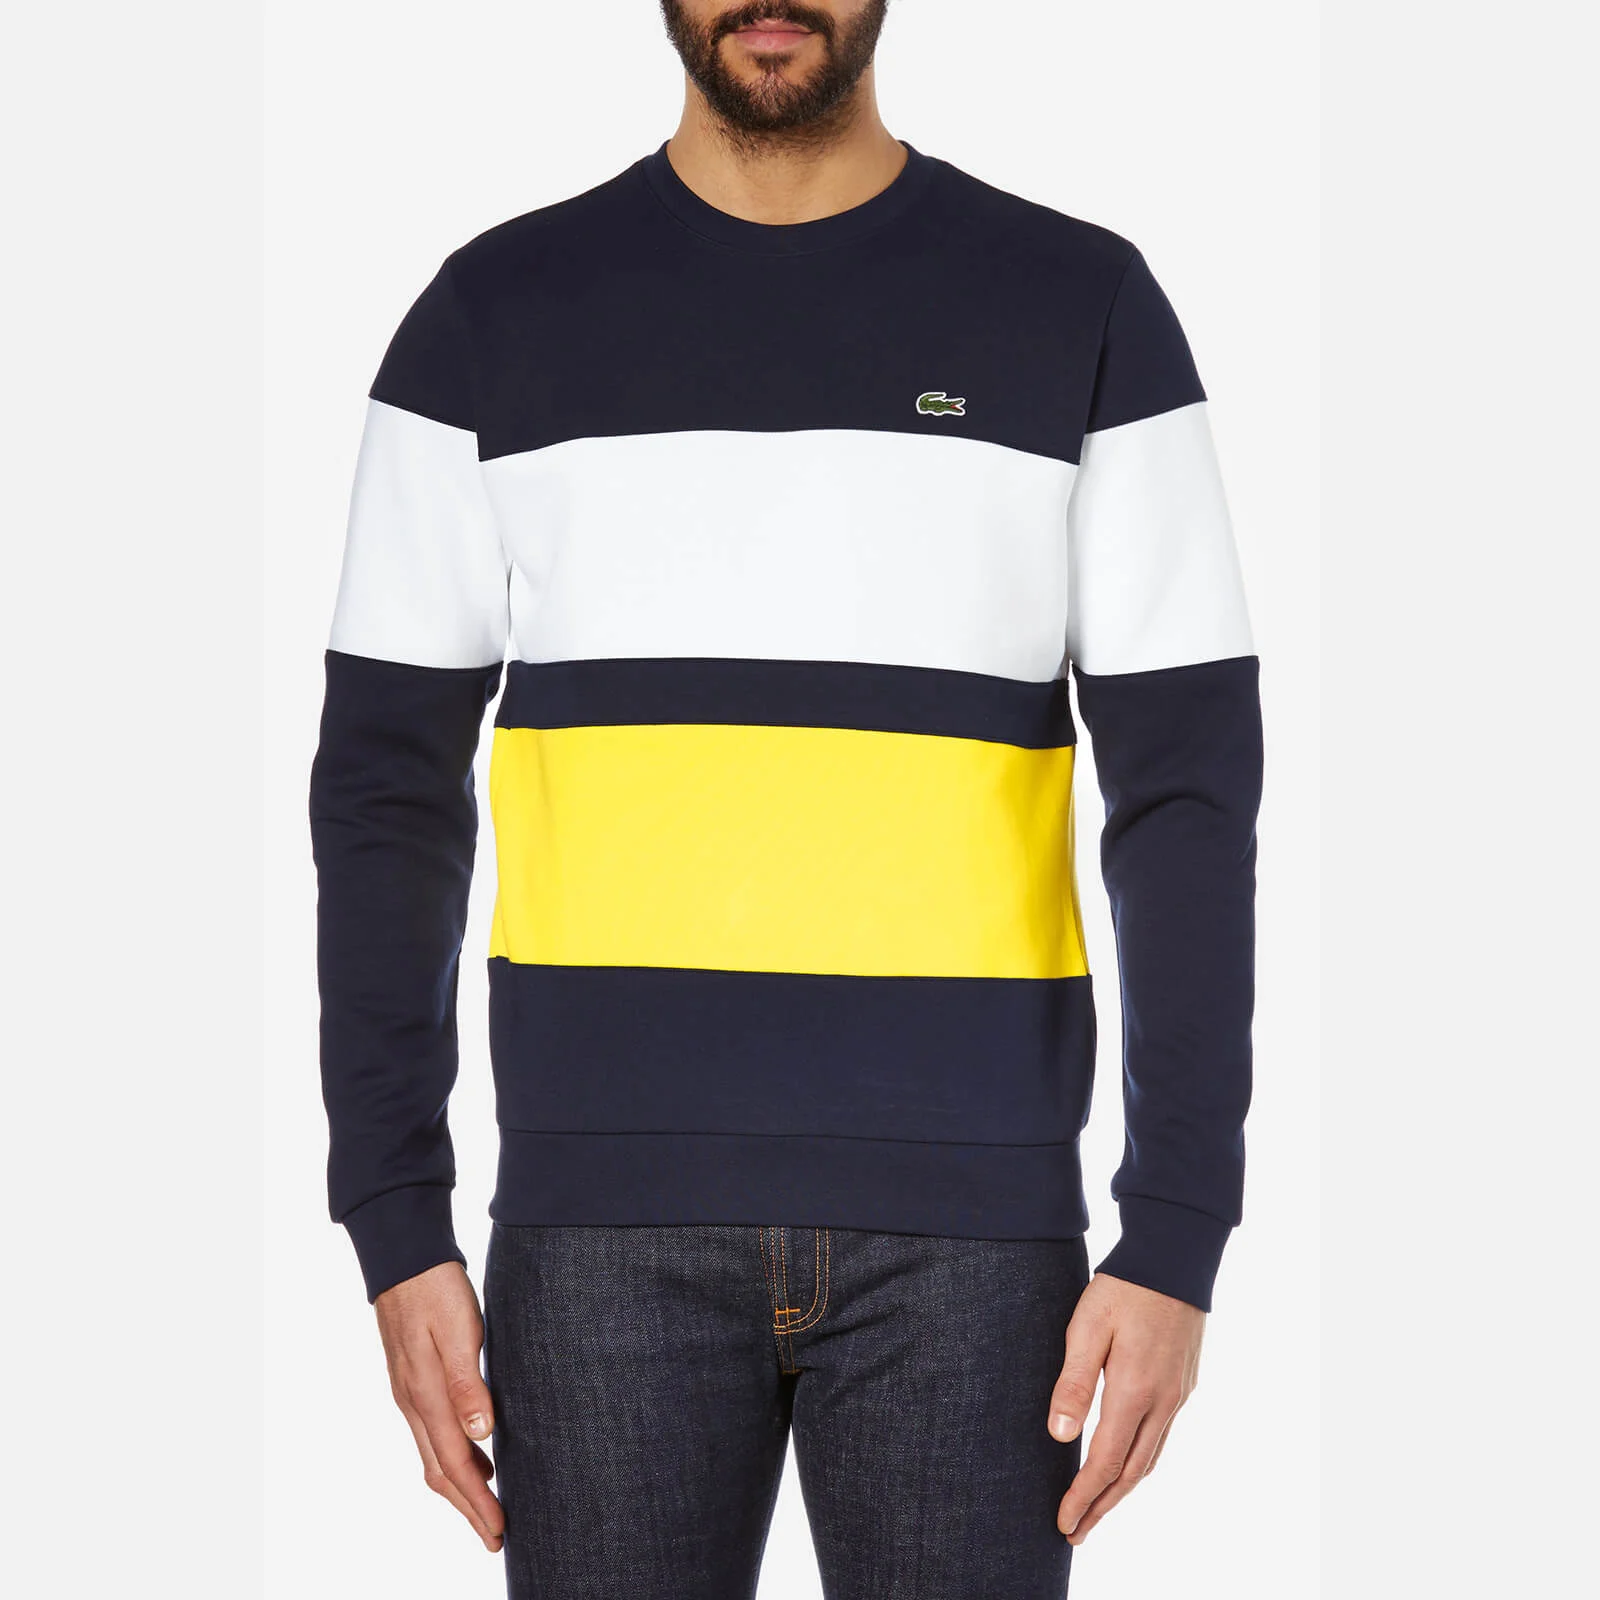 Lacoste Men's Stripe Sweatshirt - Navy/White Image 1